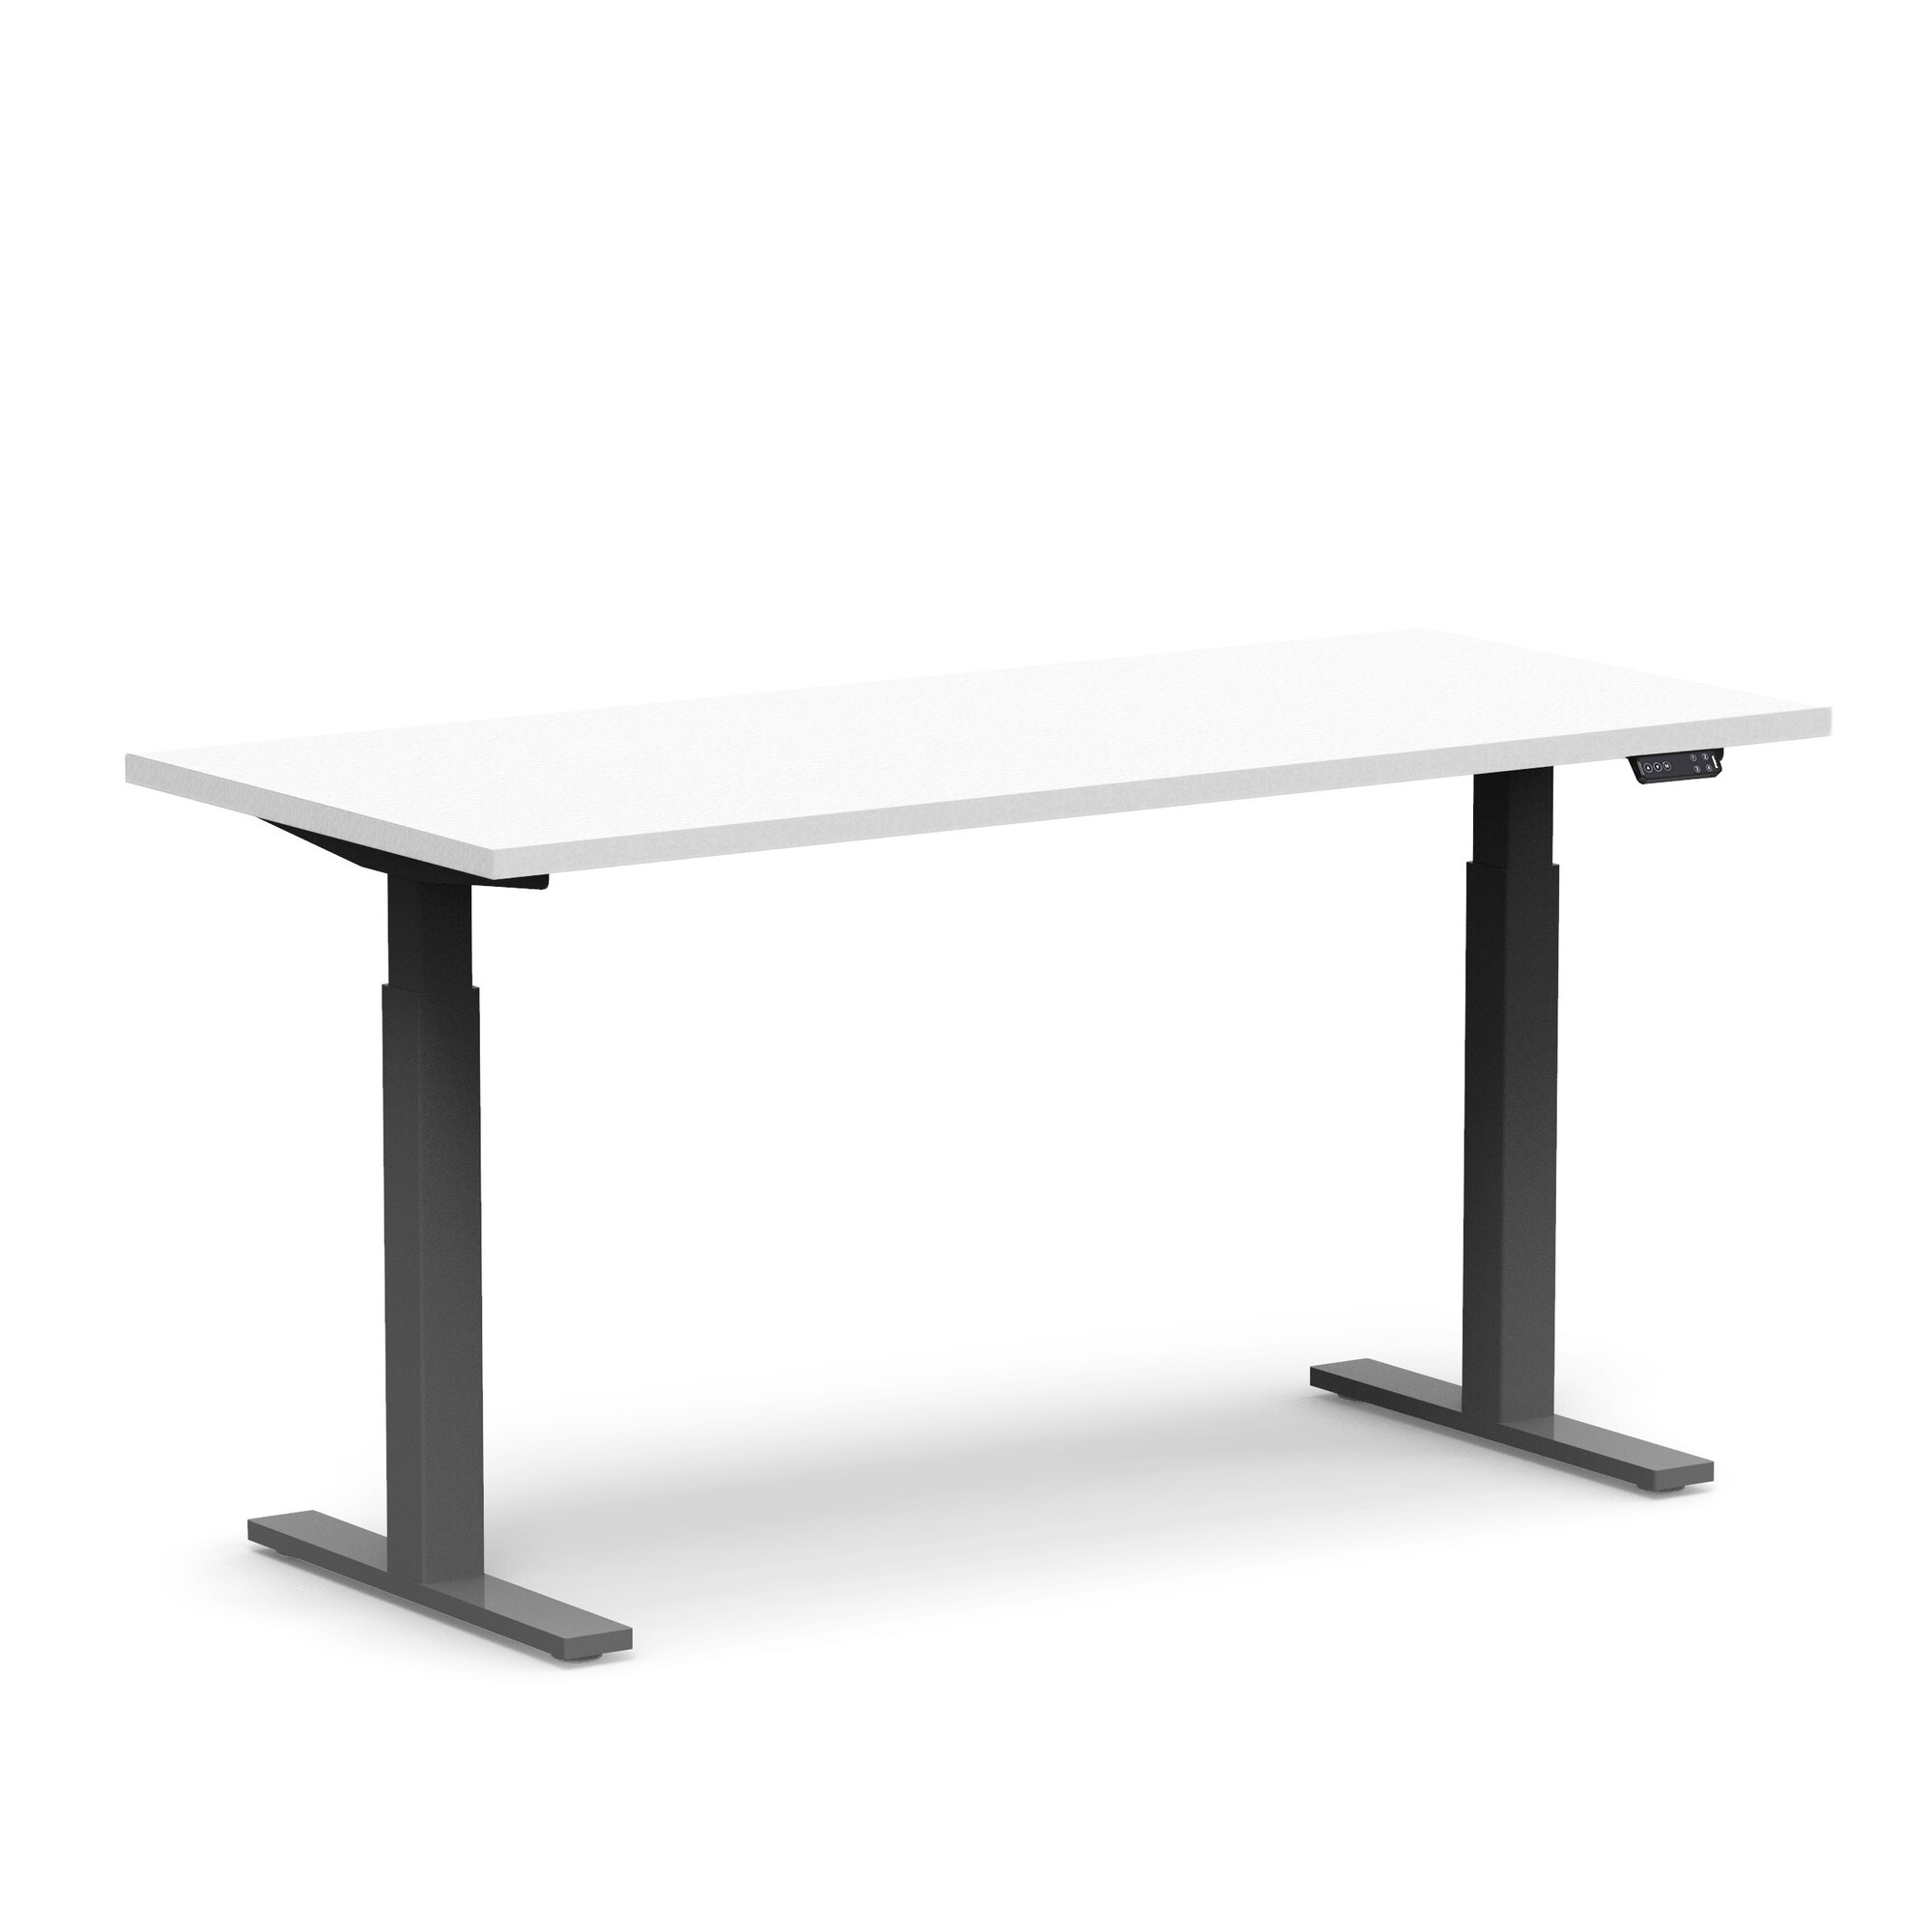 Series L Adjustable Height Single Desk, Charcoal Legs